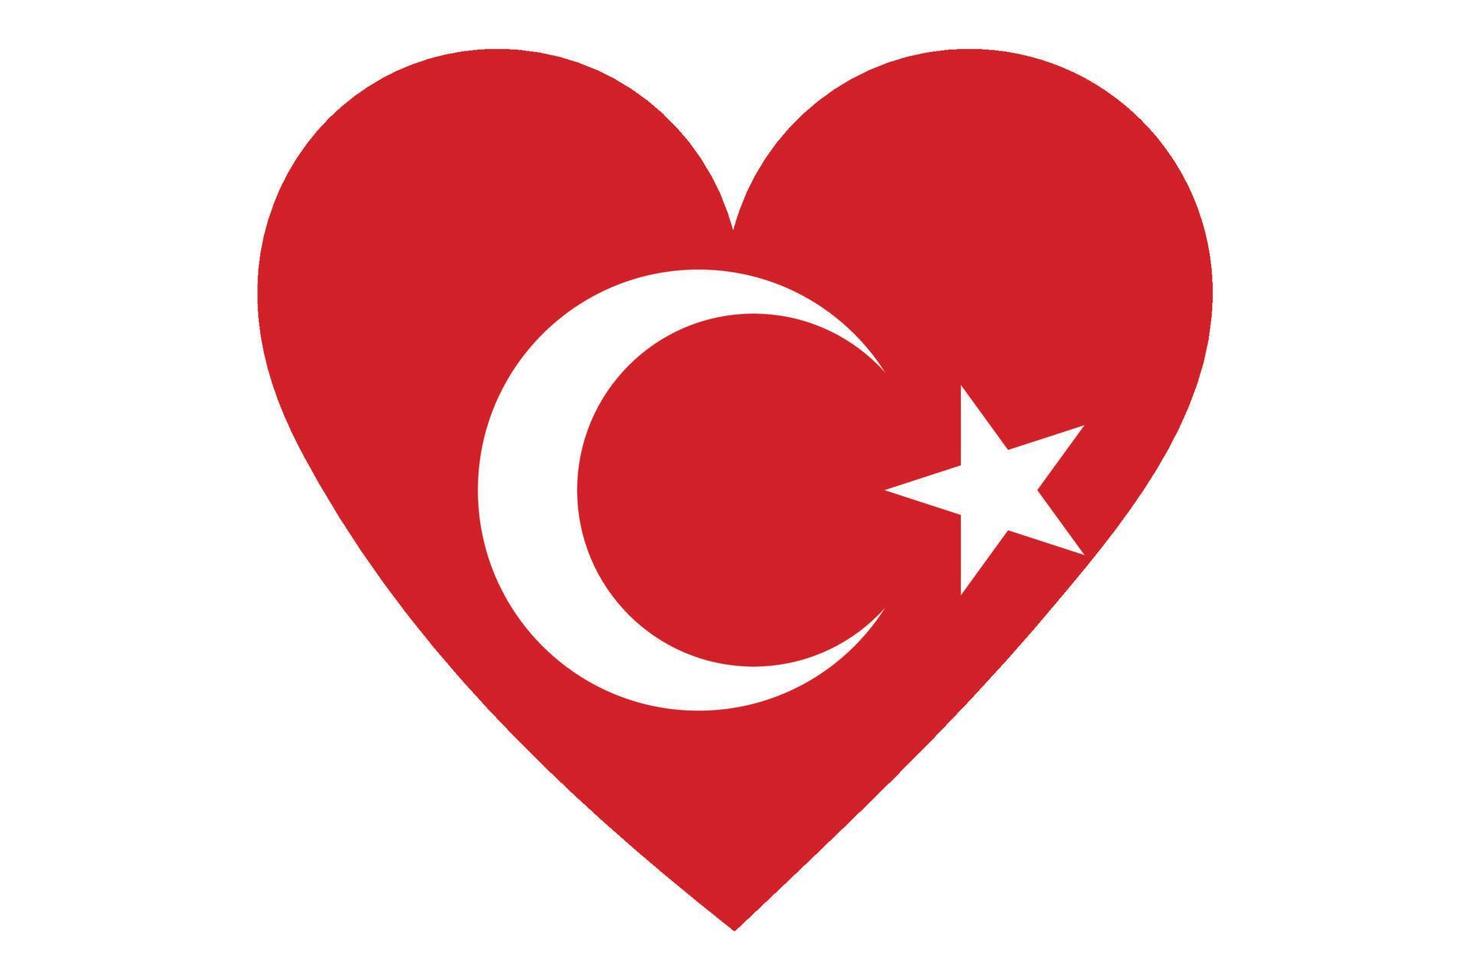 Heart flag vector of Turkey on white background.